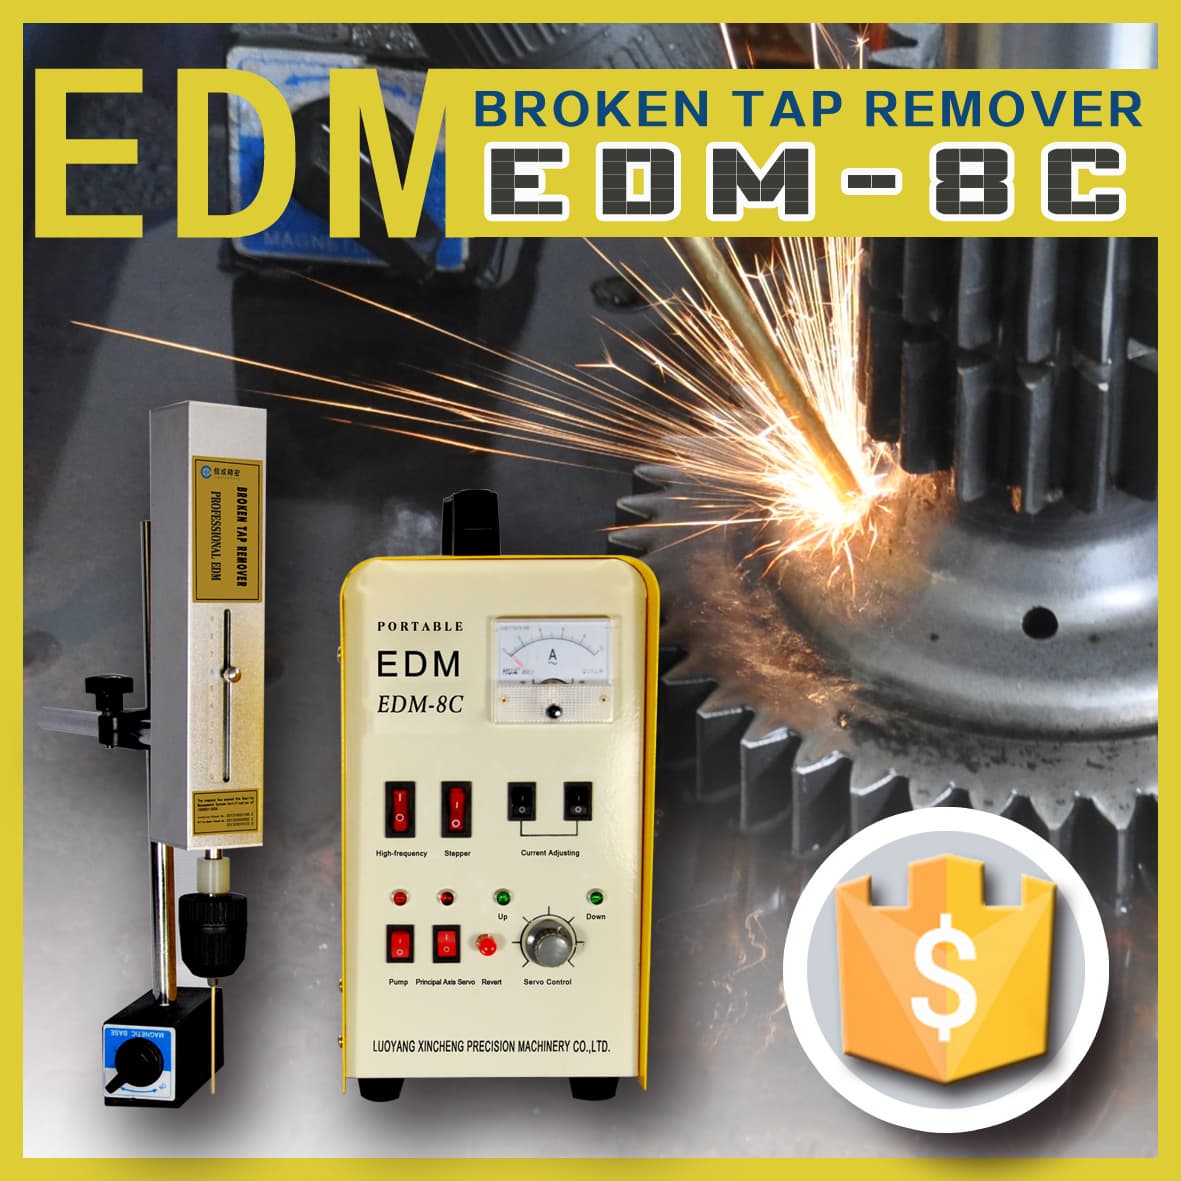 Portable EDM _ Broken tap remover